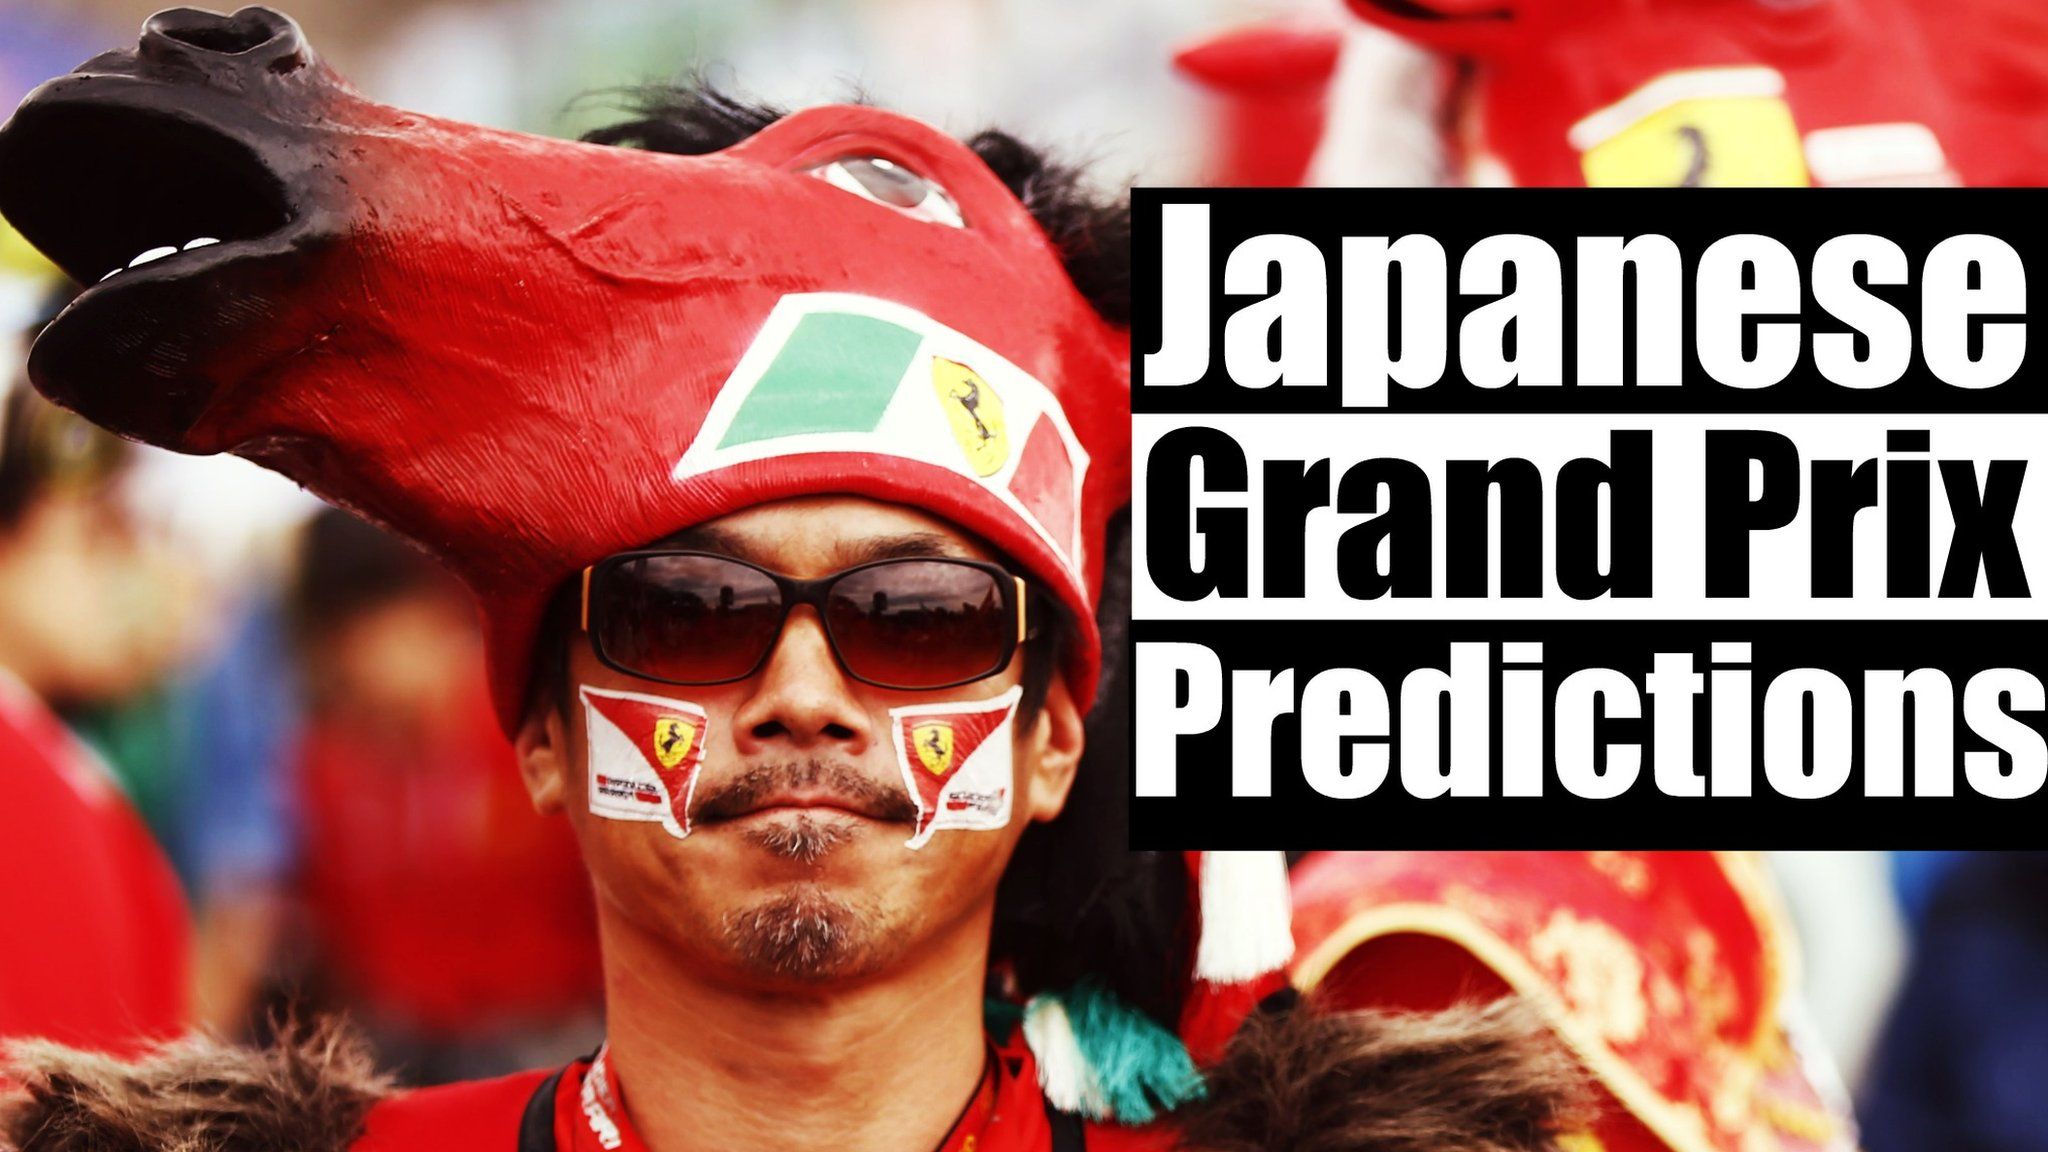 Japanese Grand Prix predictions